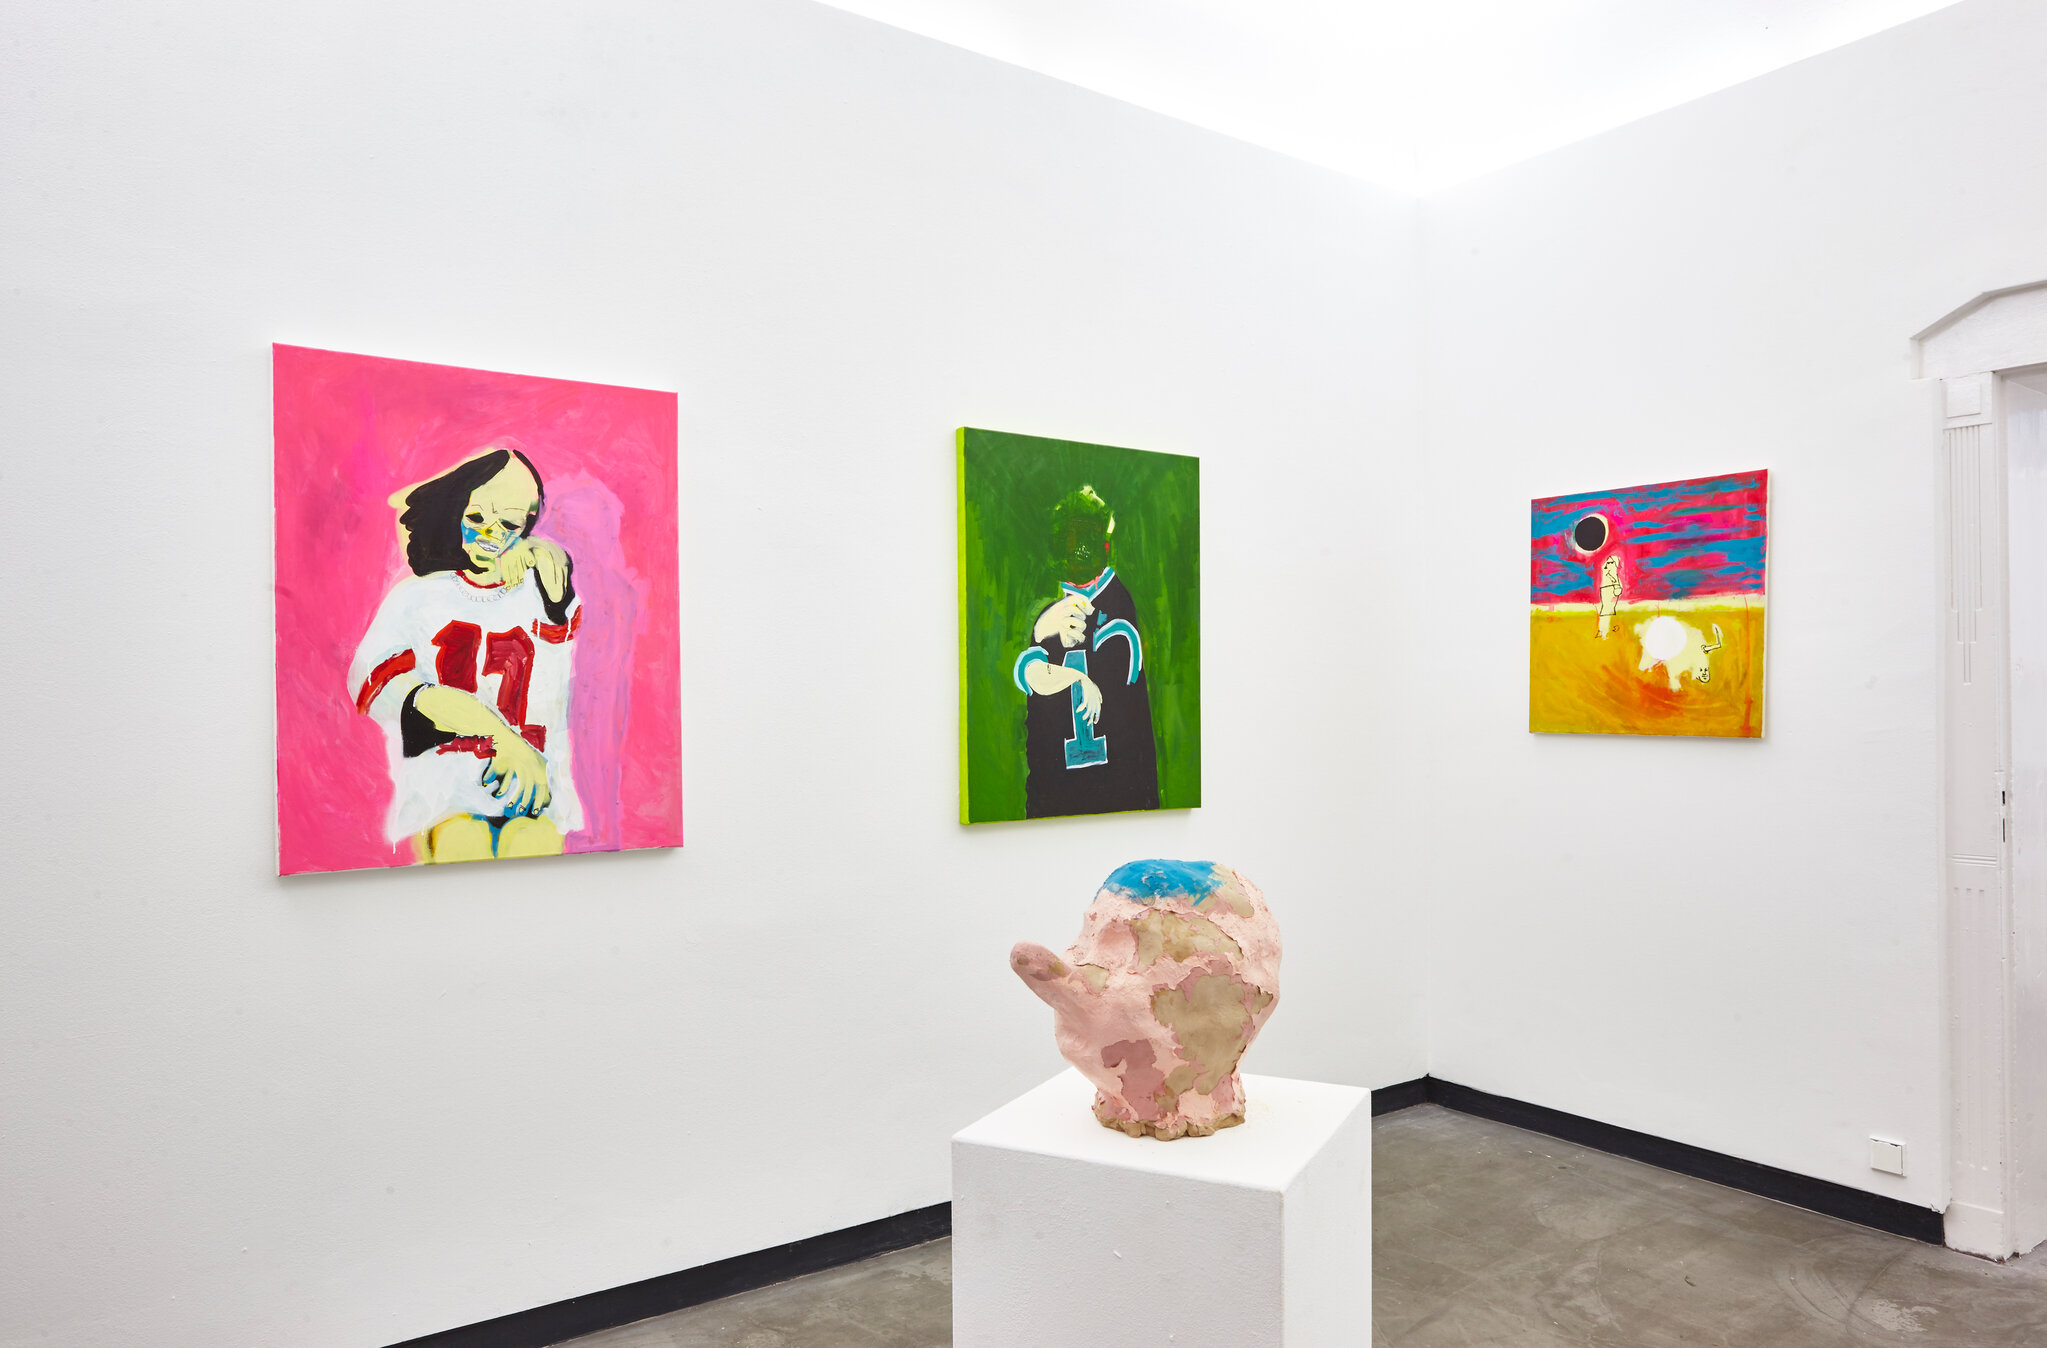 Jon Konkol, Installation views from "Pink Pony, Yellow Room"